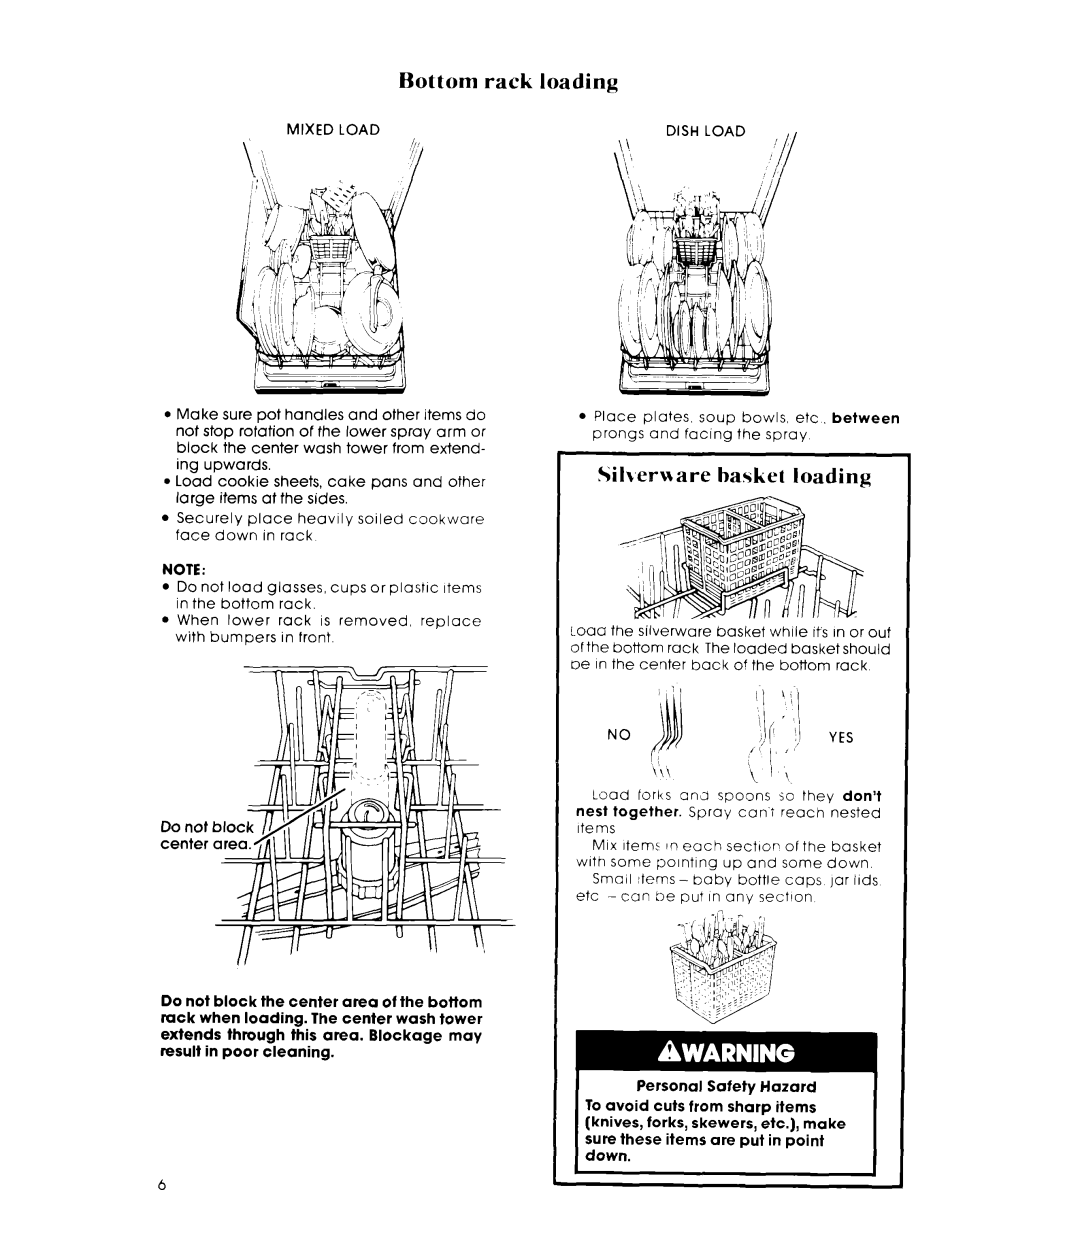 Whirlpool DU1800XT manual Bottom rack loading, SilwrMare basket loading 